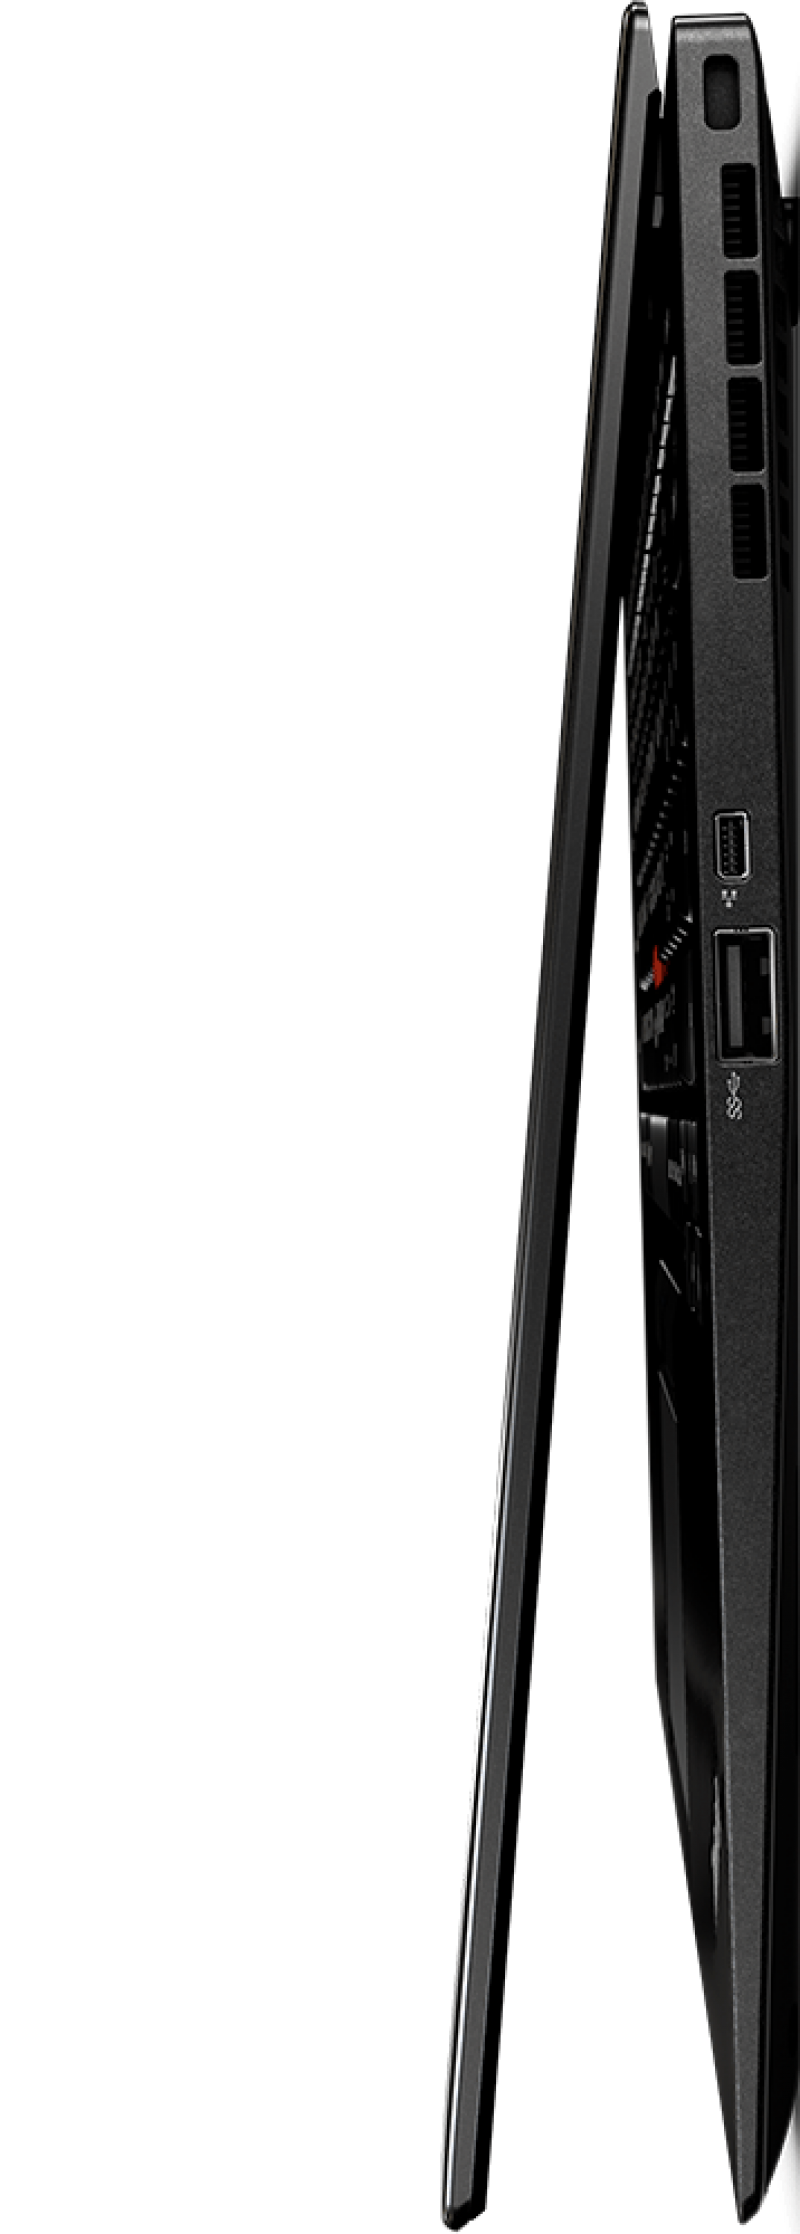 â€‹Ultrabook Lenovo ThinkPad X1 Carbon